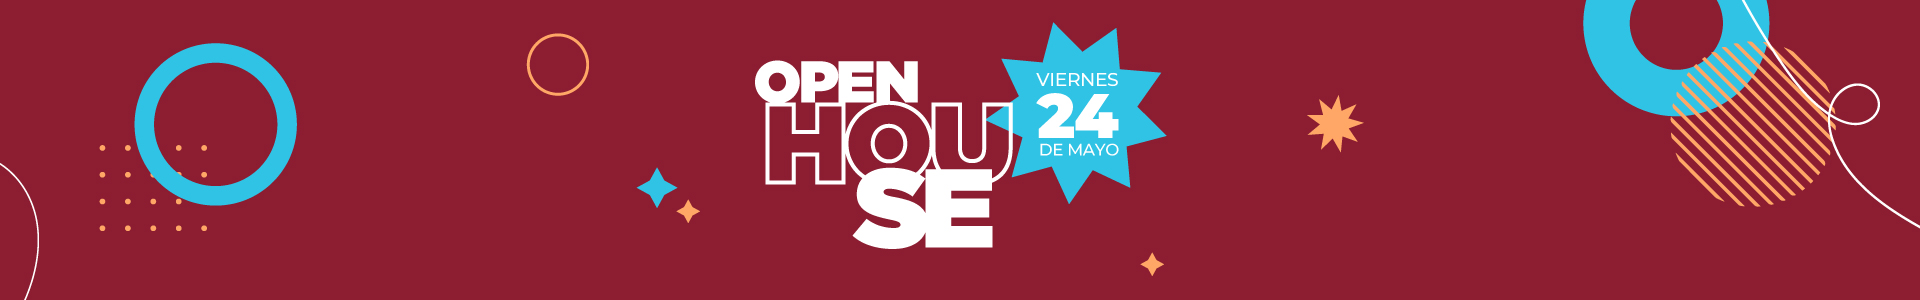 Open House - Universidad ORT Uruguay